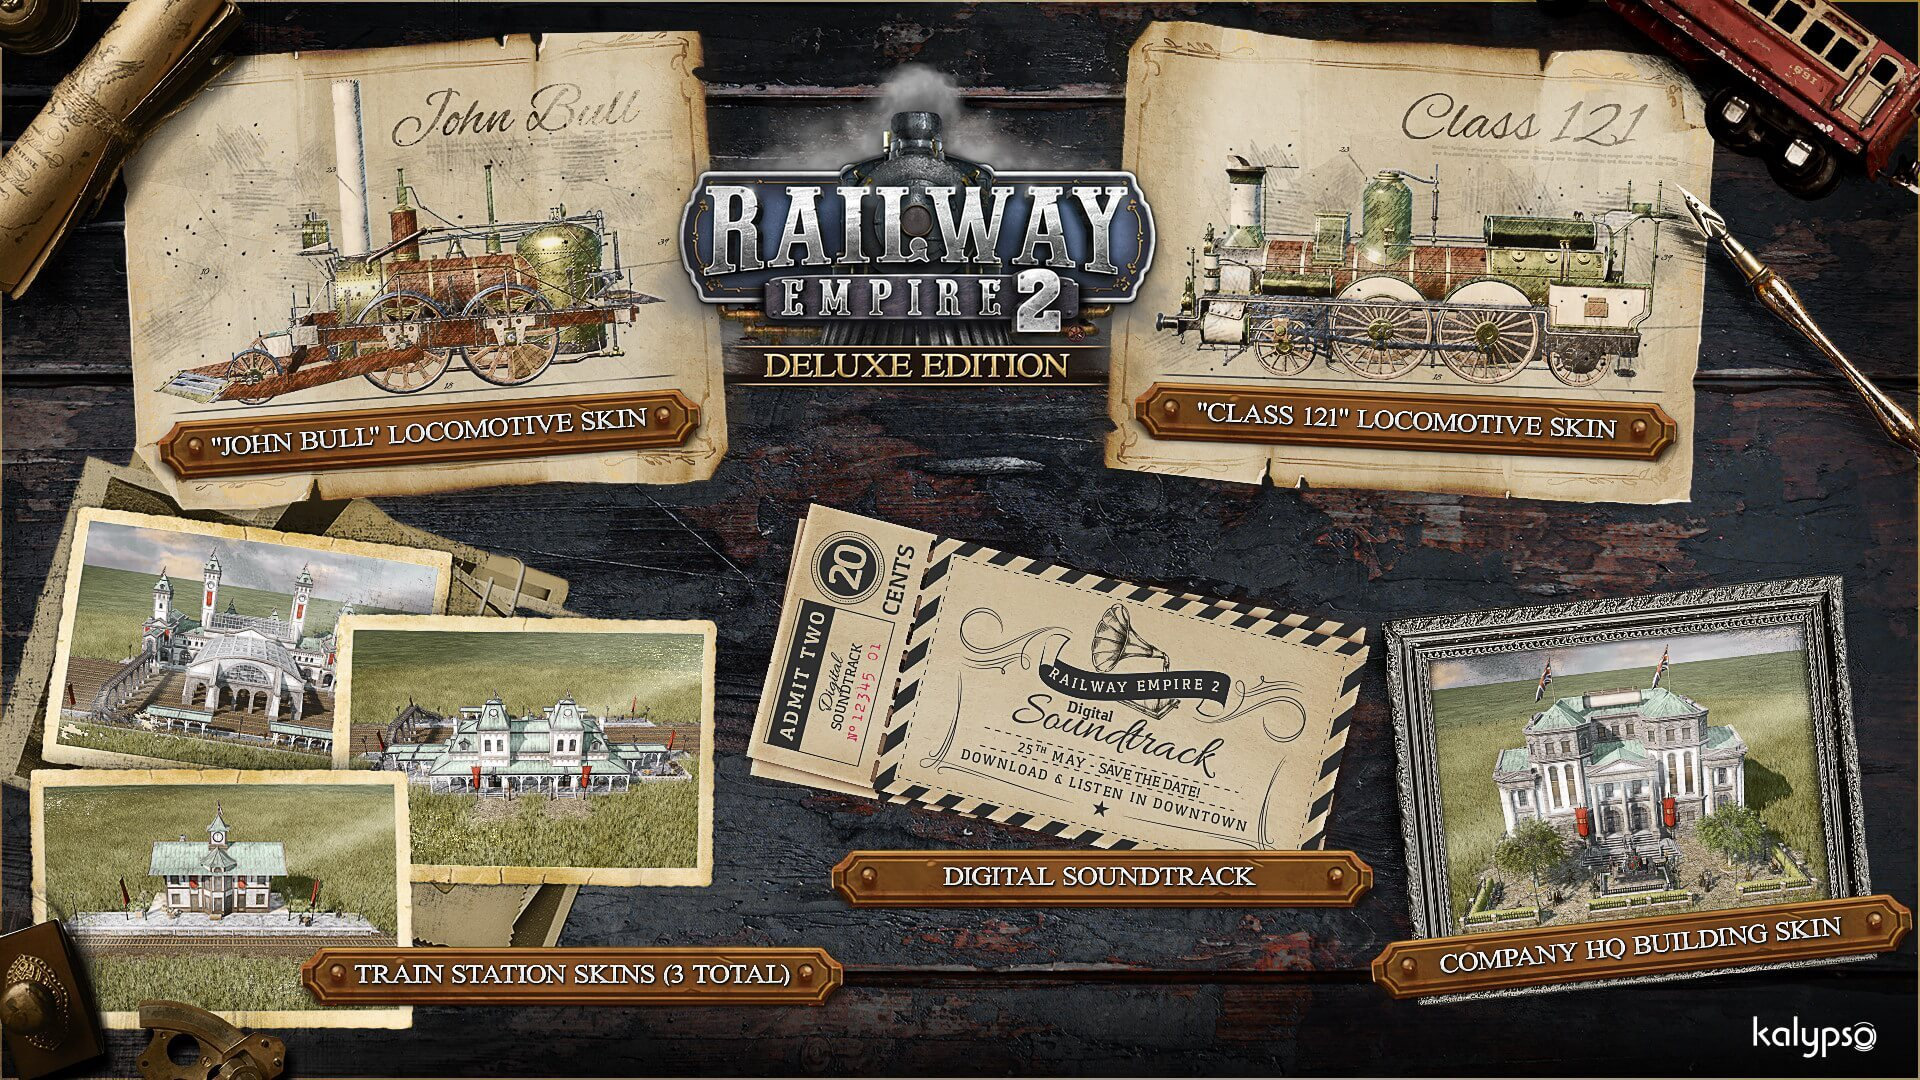 Railway Empire 2 - Deluxe Edition includes